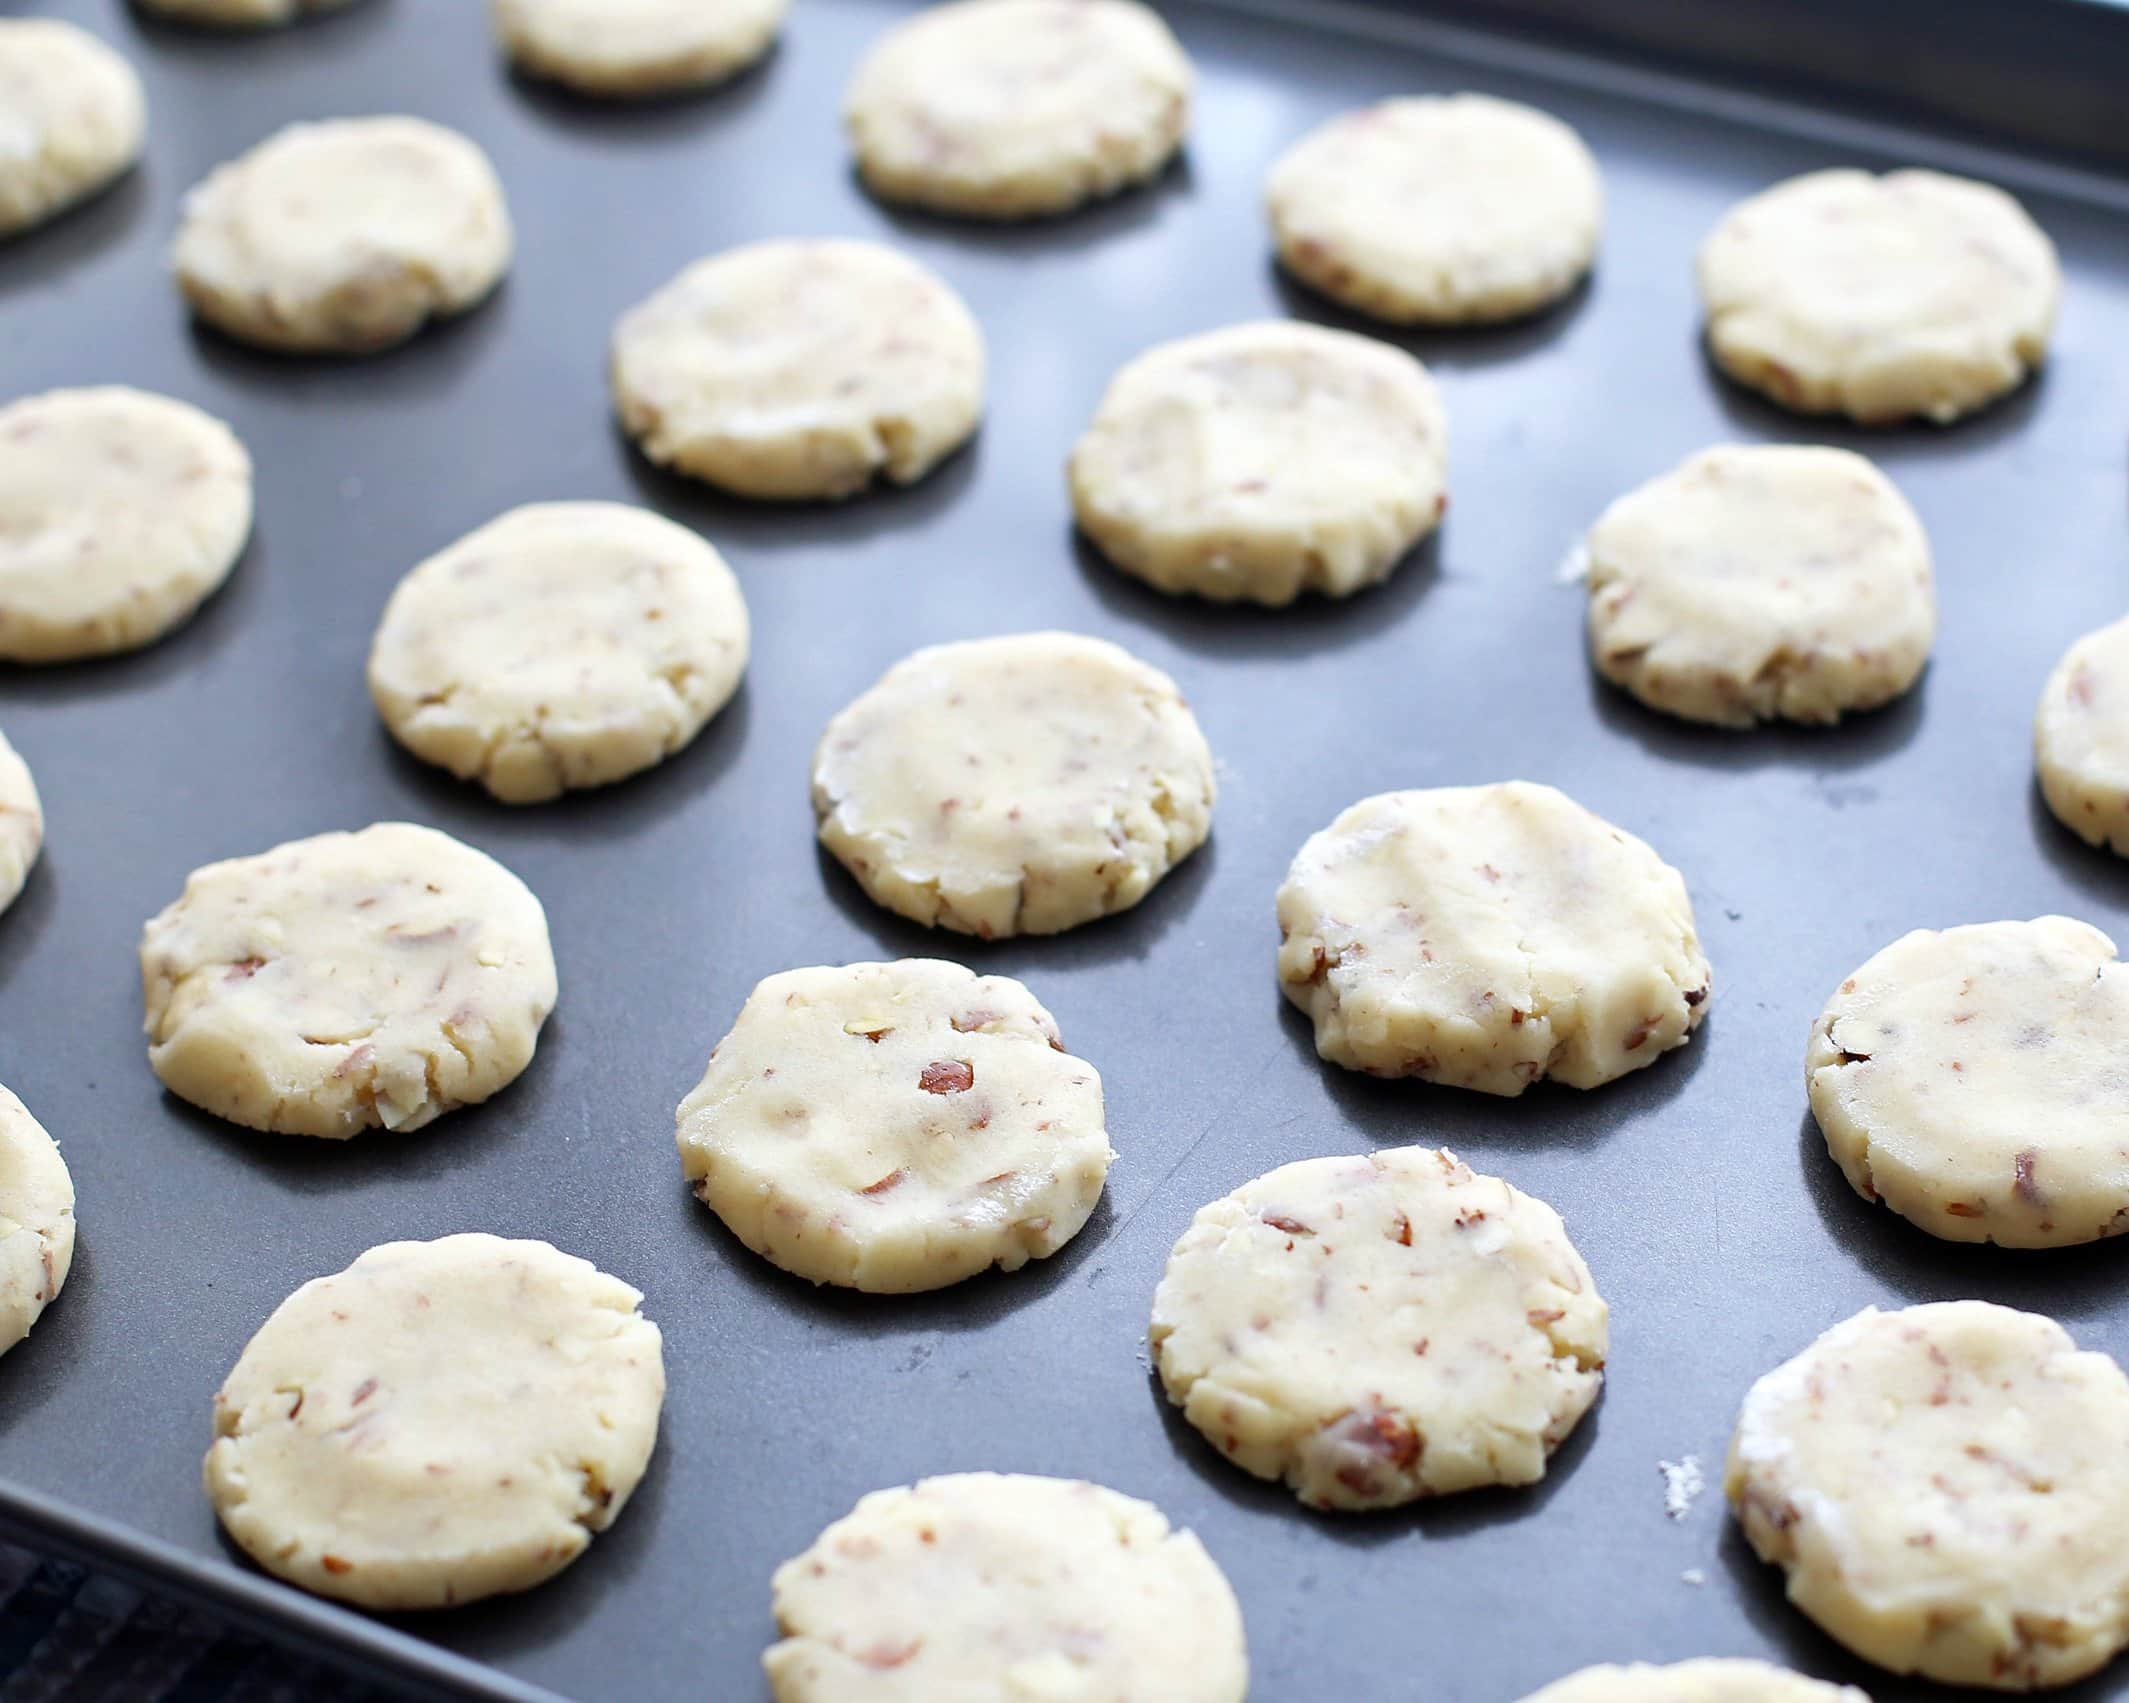 Pre-baked flattened almond cookie dough balls on a baking sheet.